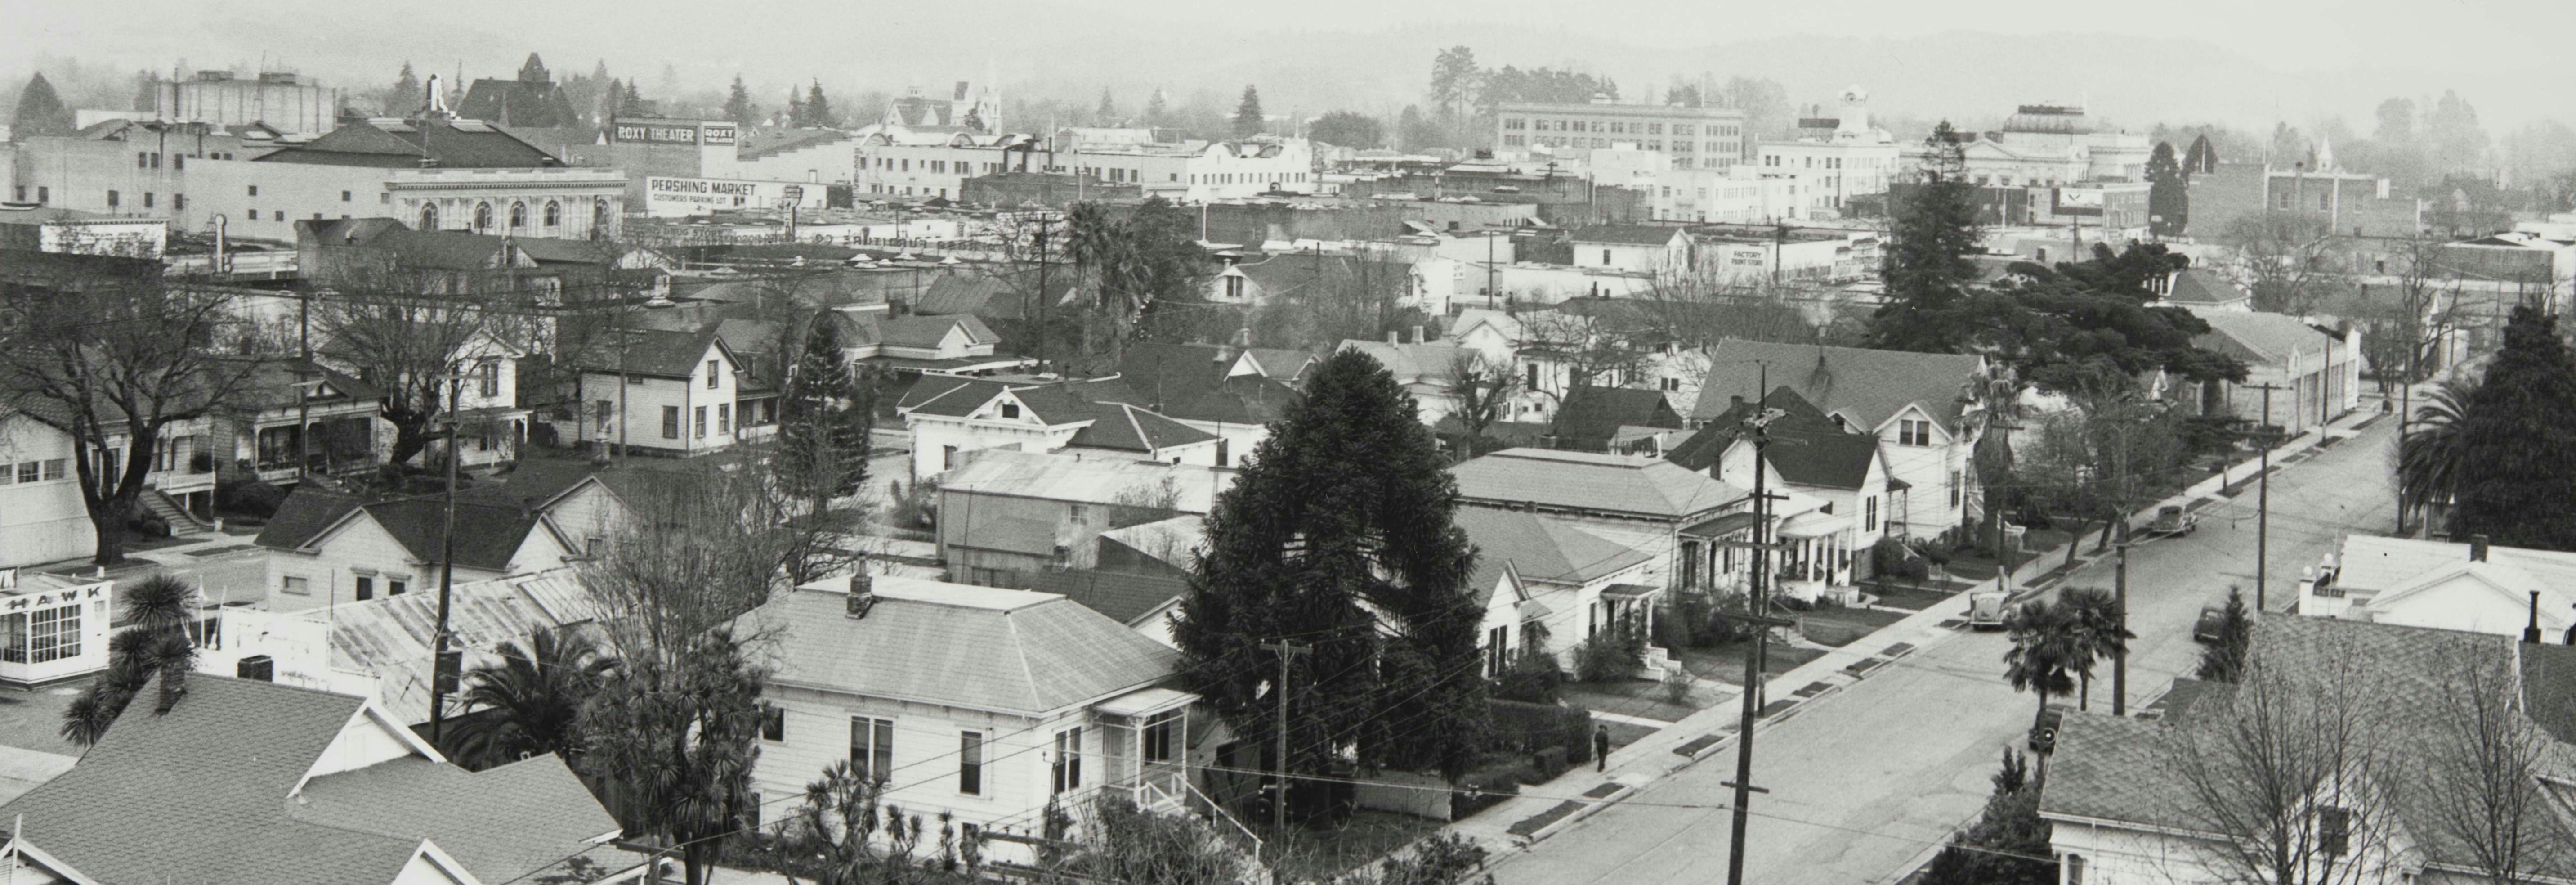 Photo courtesy of Sonoma County Library.